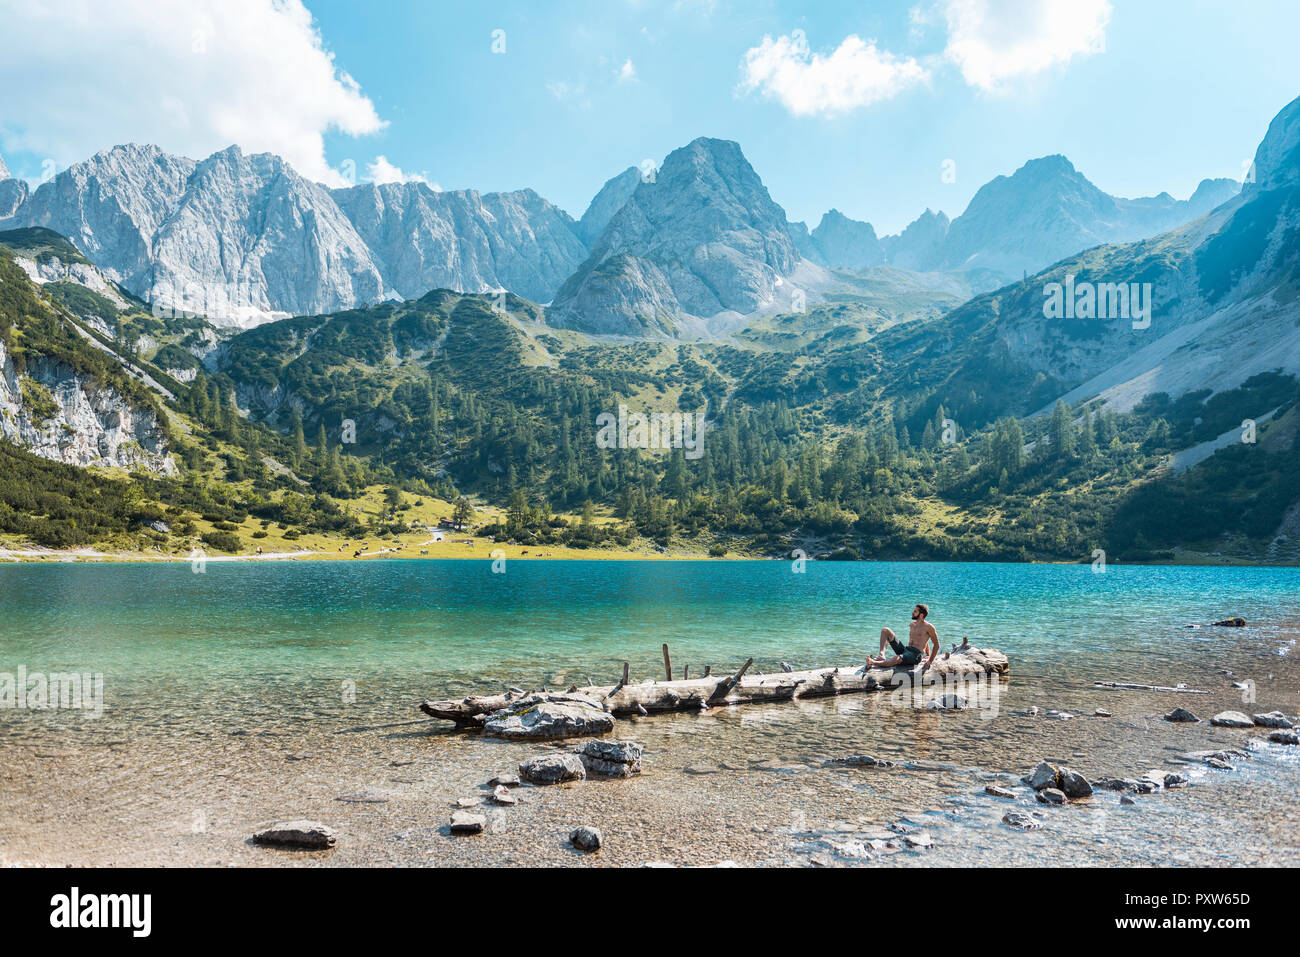 Austria, Tirolo, giovane uomo al Lago Seebensee seduto sul tronco di albero Foto Stock